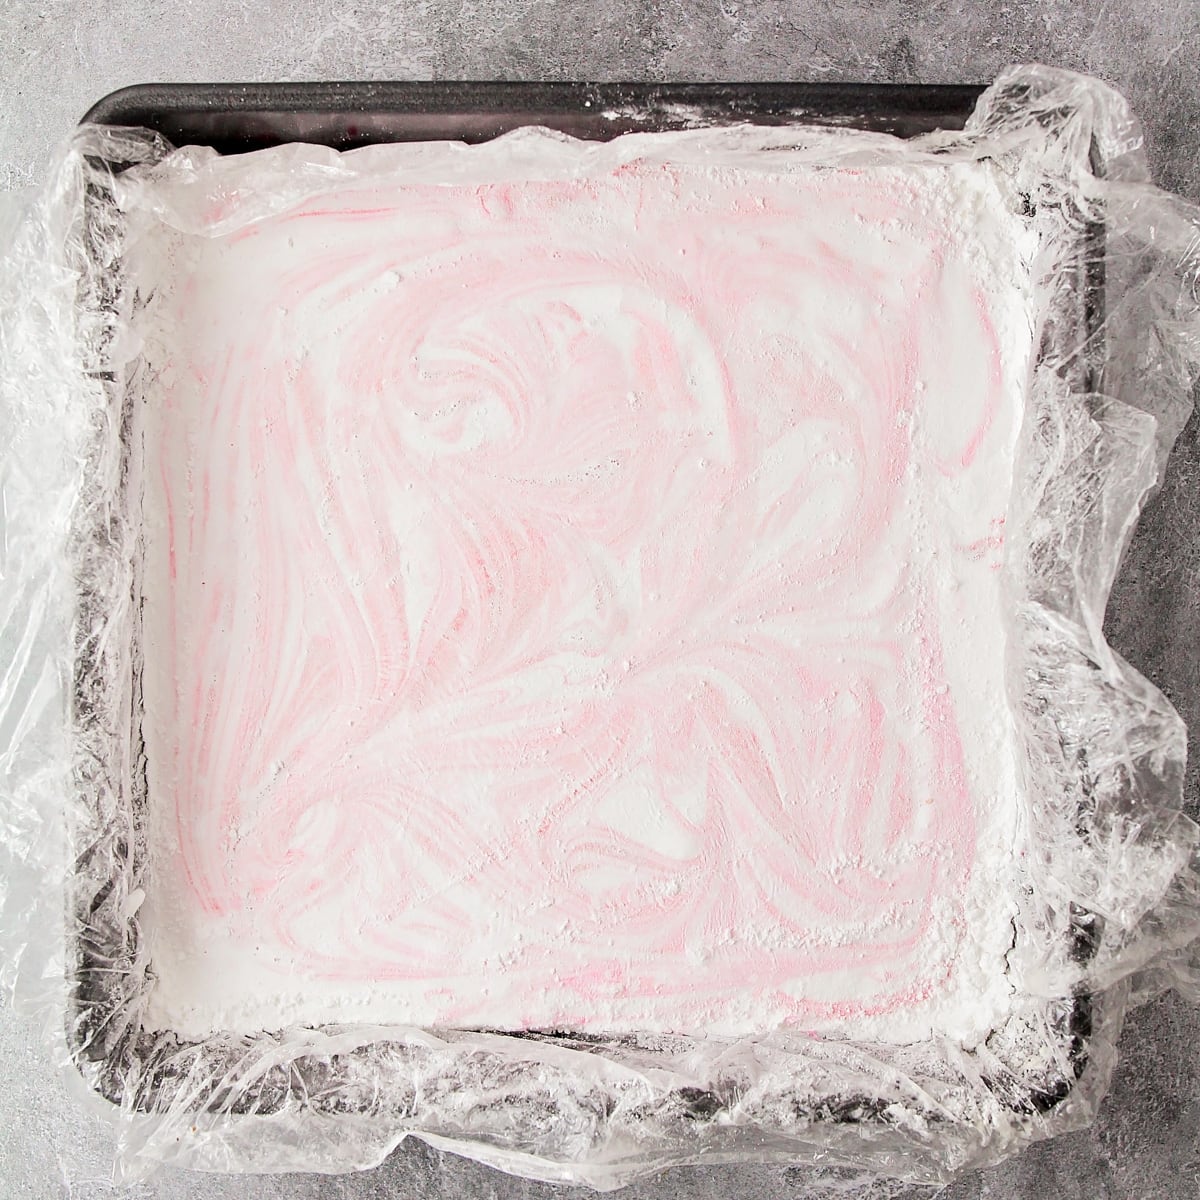 Red swirl marshmallow mixture in a metal pan.